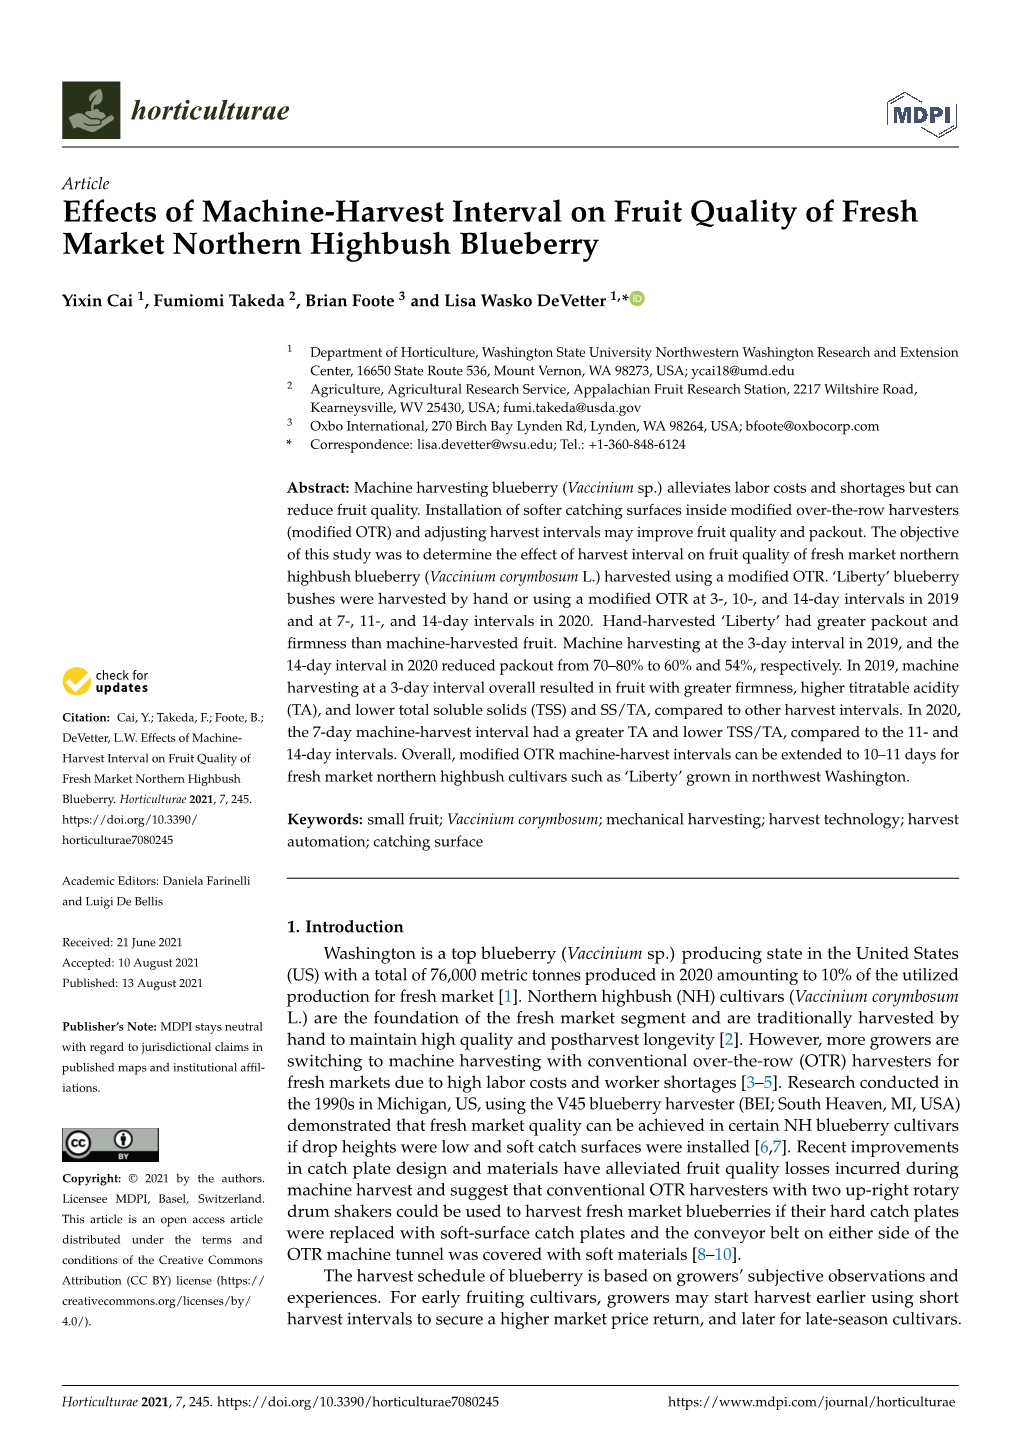 Effects of Machine-Harvest Interval on Fruit Quality of Fresh Market Northern Highbush Blueberry